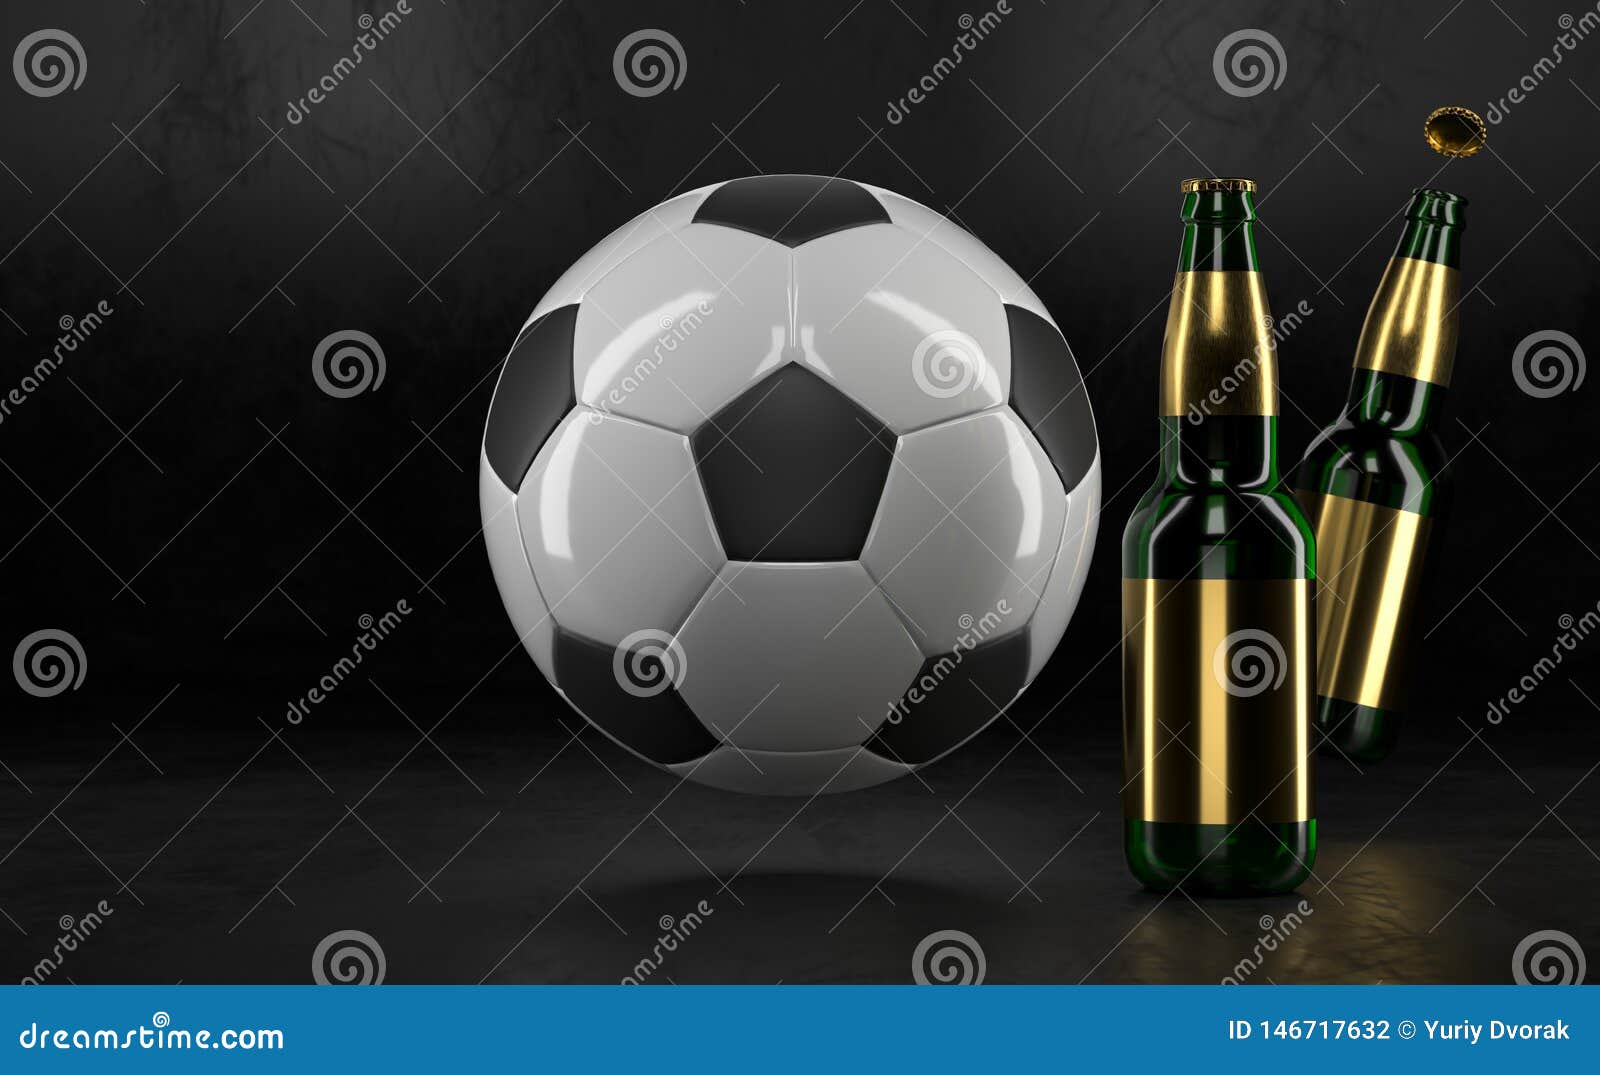 Download Beer Bottles And Soccer Ball On Black Table Beer Mock Up Beer Bottles With Football Ball Mockup Alcohol Advertising Stock Illustration Illustration Of Full Brown 146717632